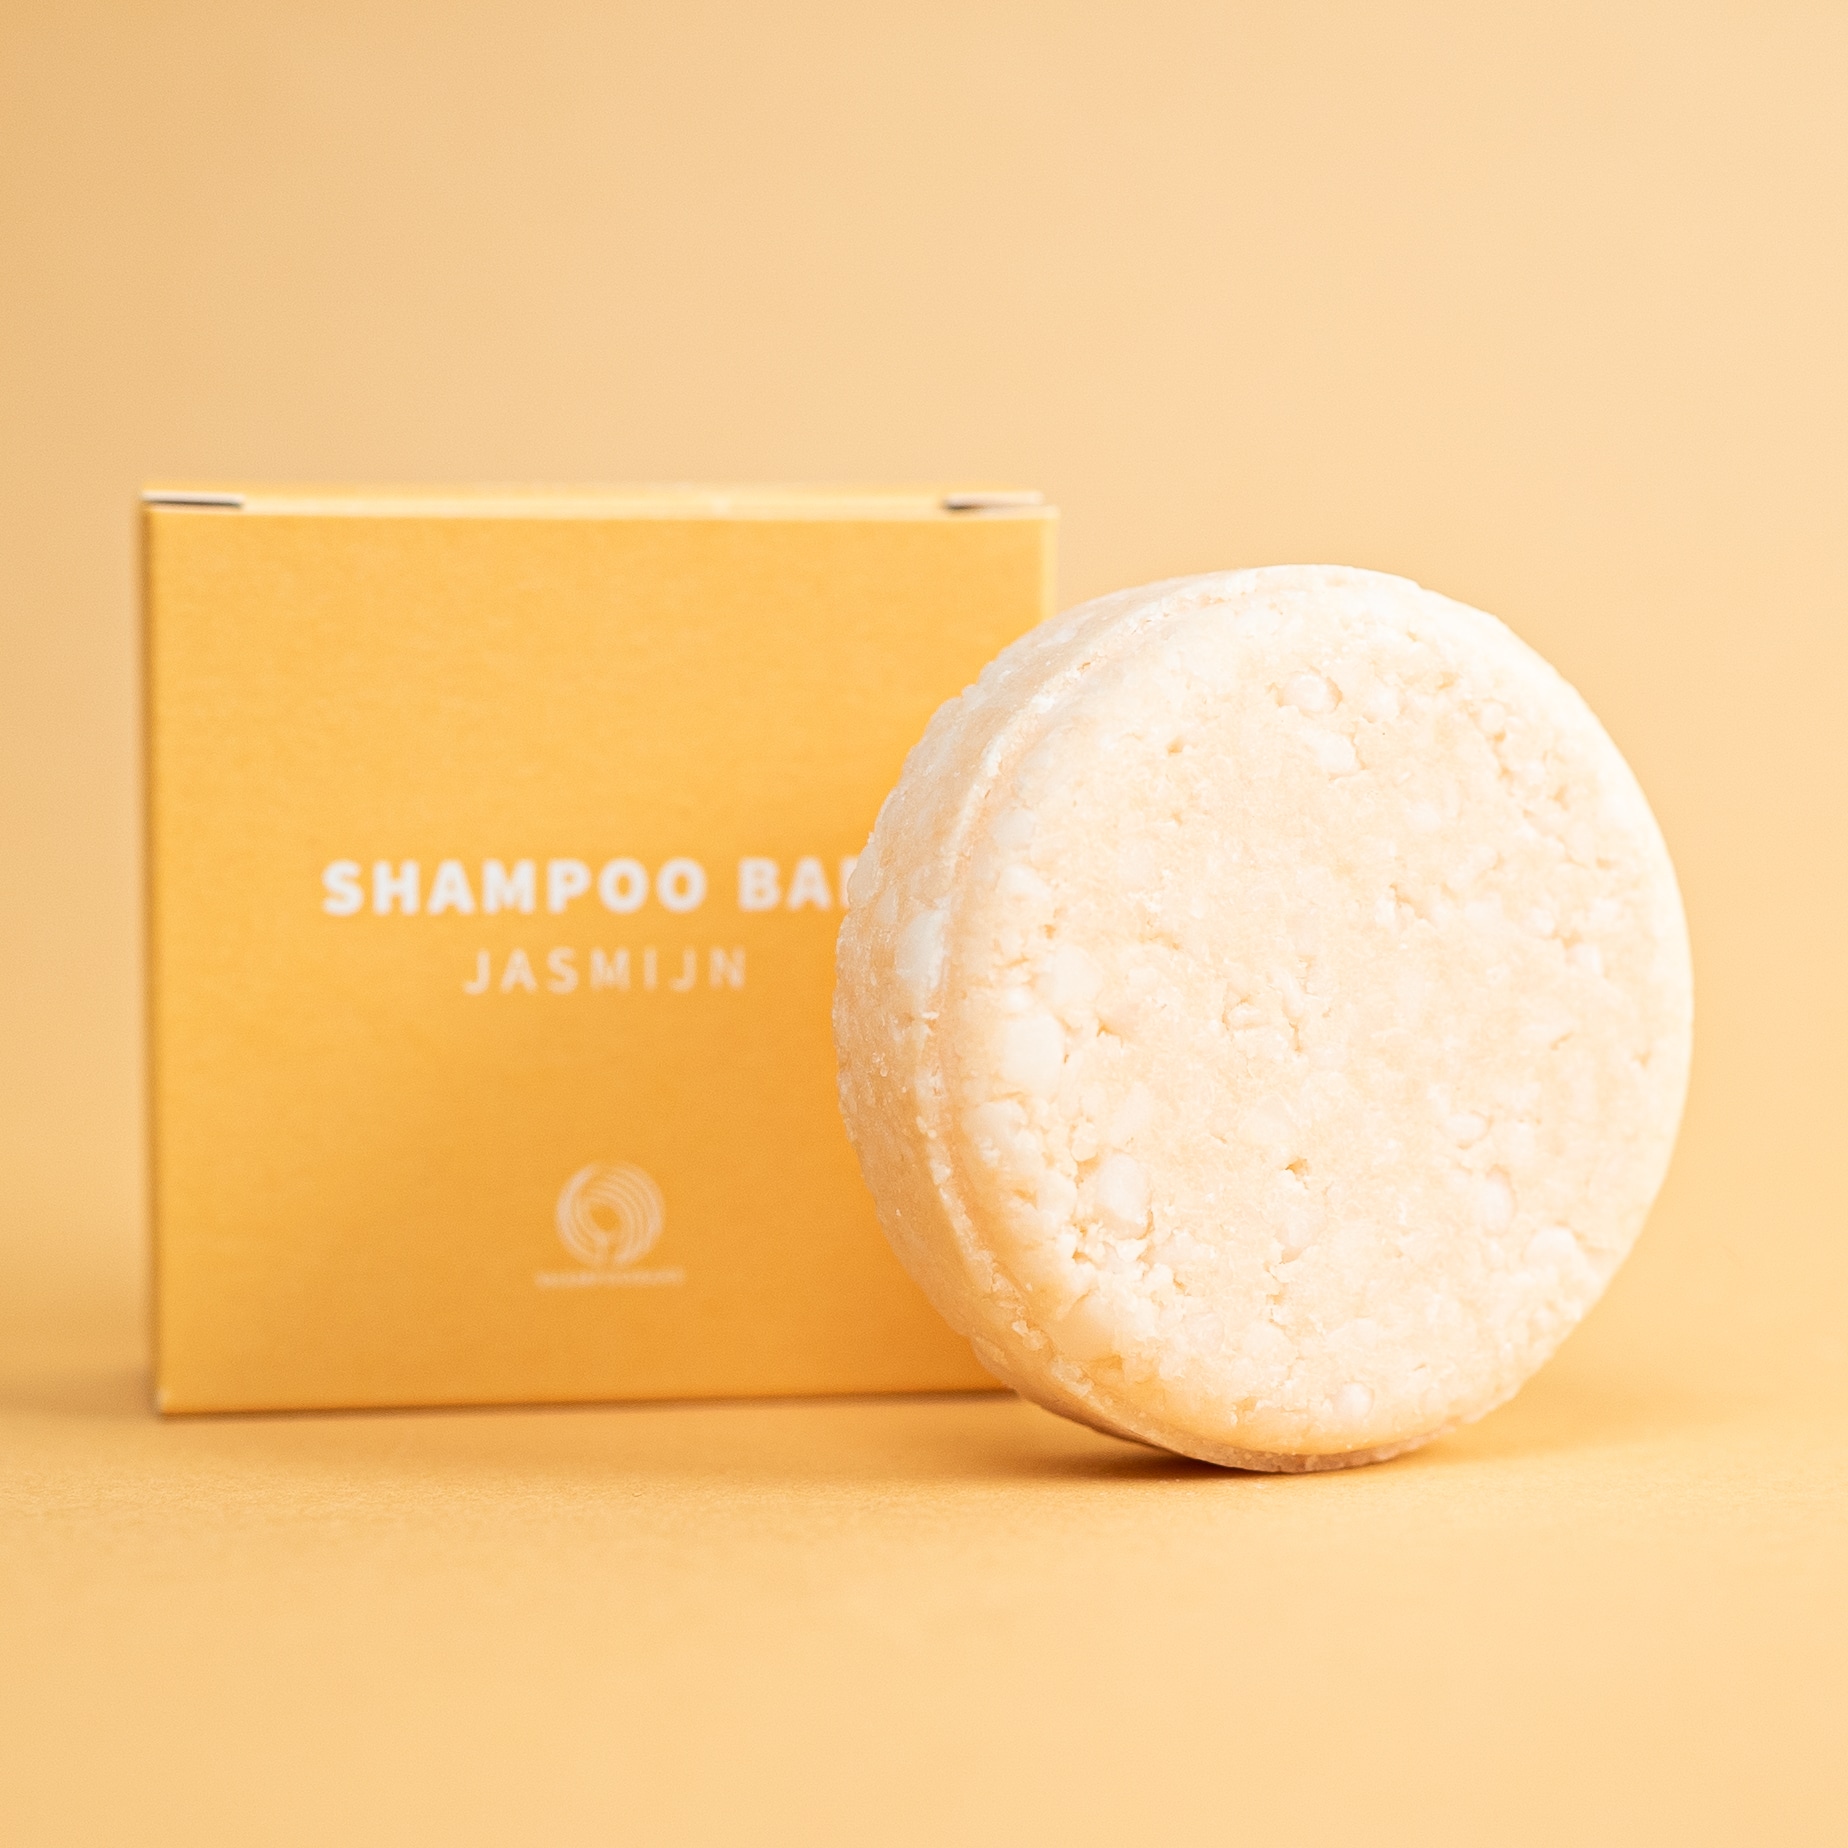 Shampoo Bar Jasmin, Shampoo Bars